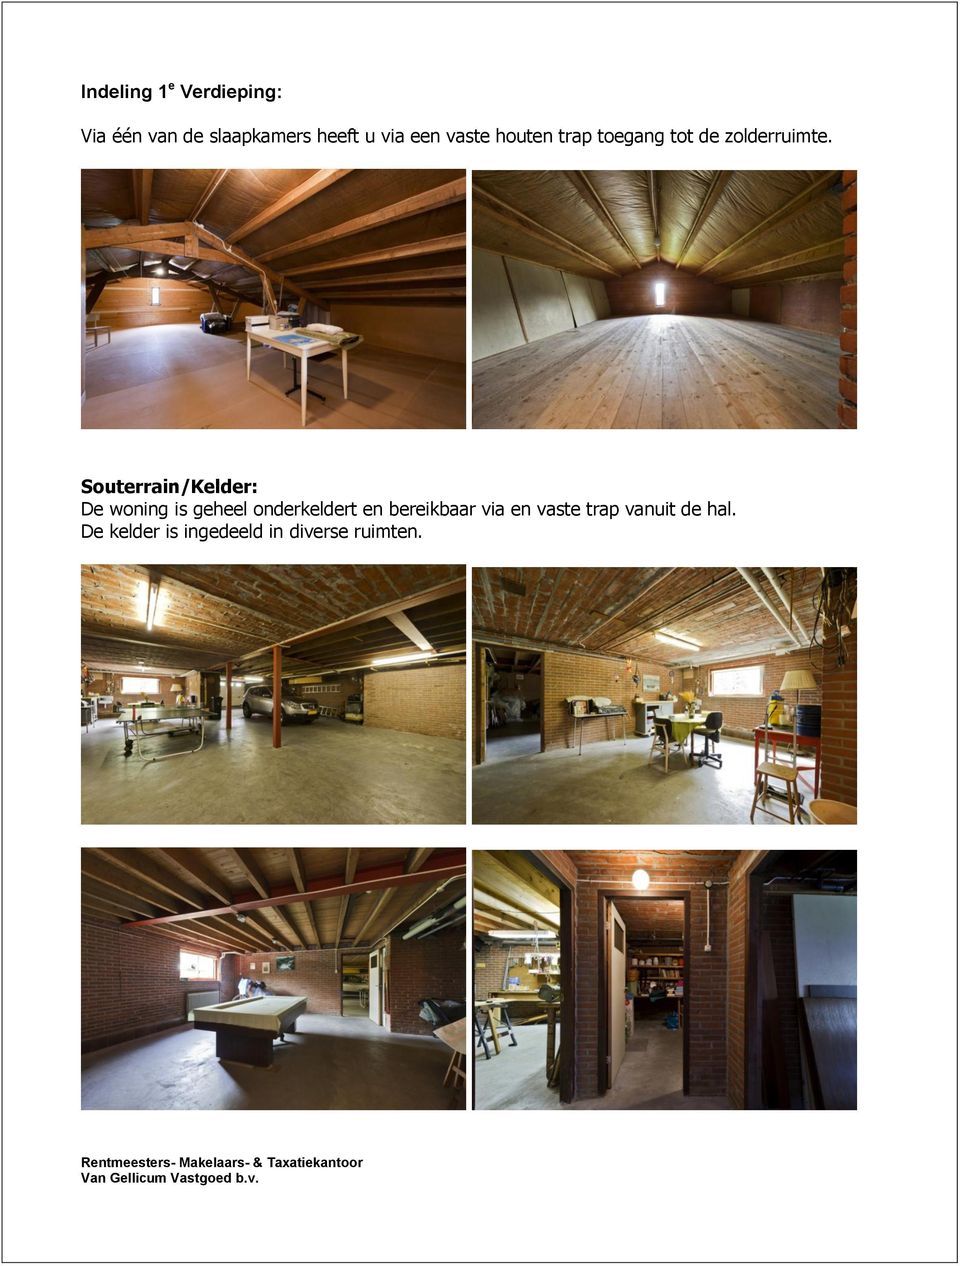 Souterrain/Kelder: De woning is geheel onderkeldert en